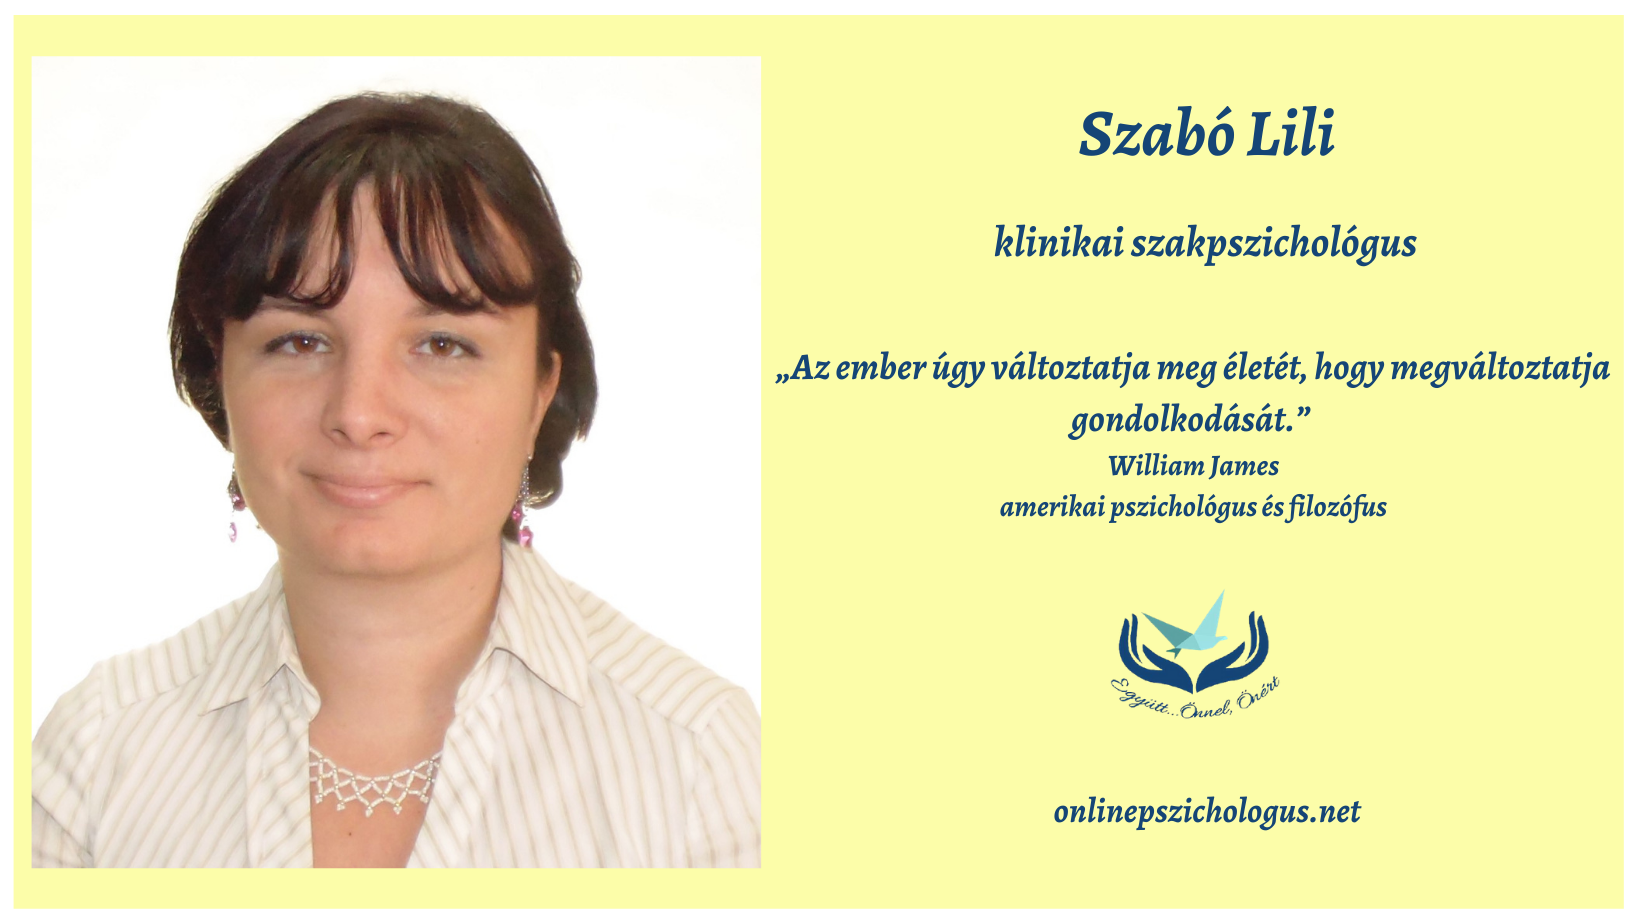 Interjú Szabó Lili klinikai szakpszichológussal